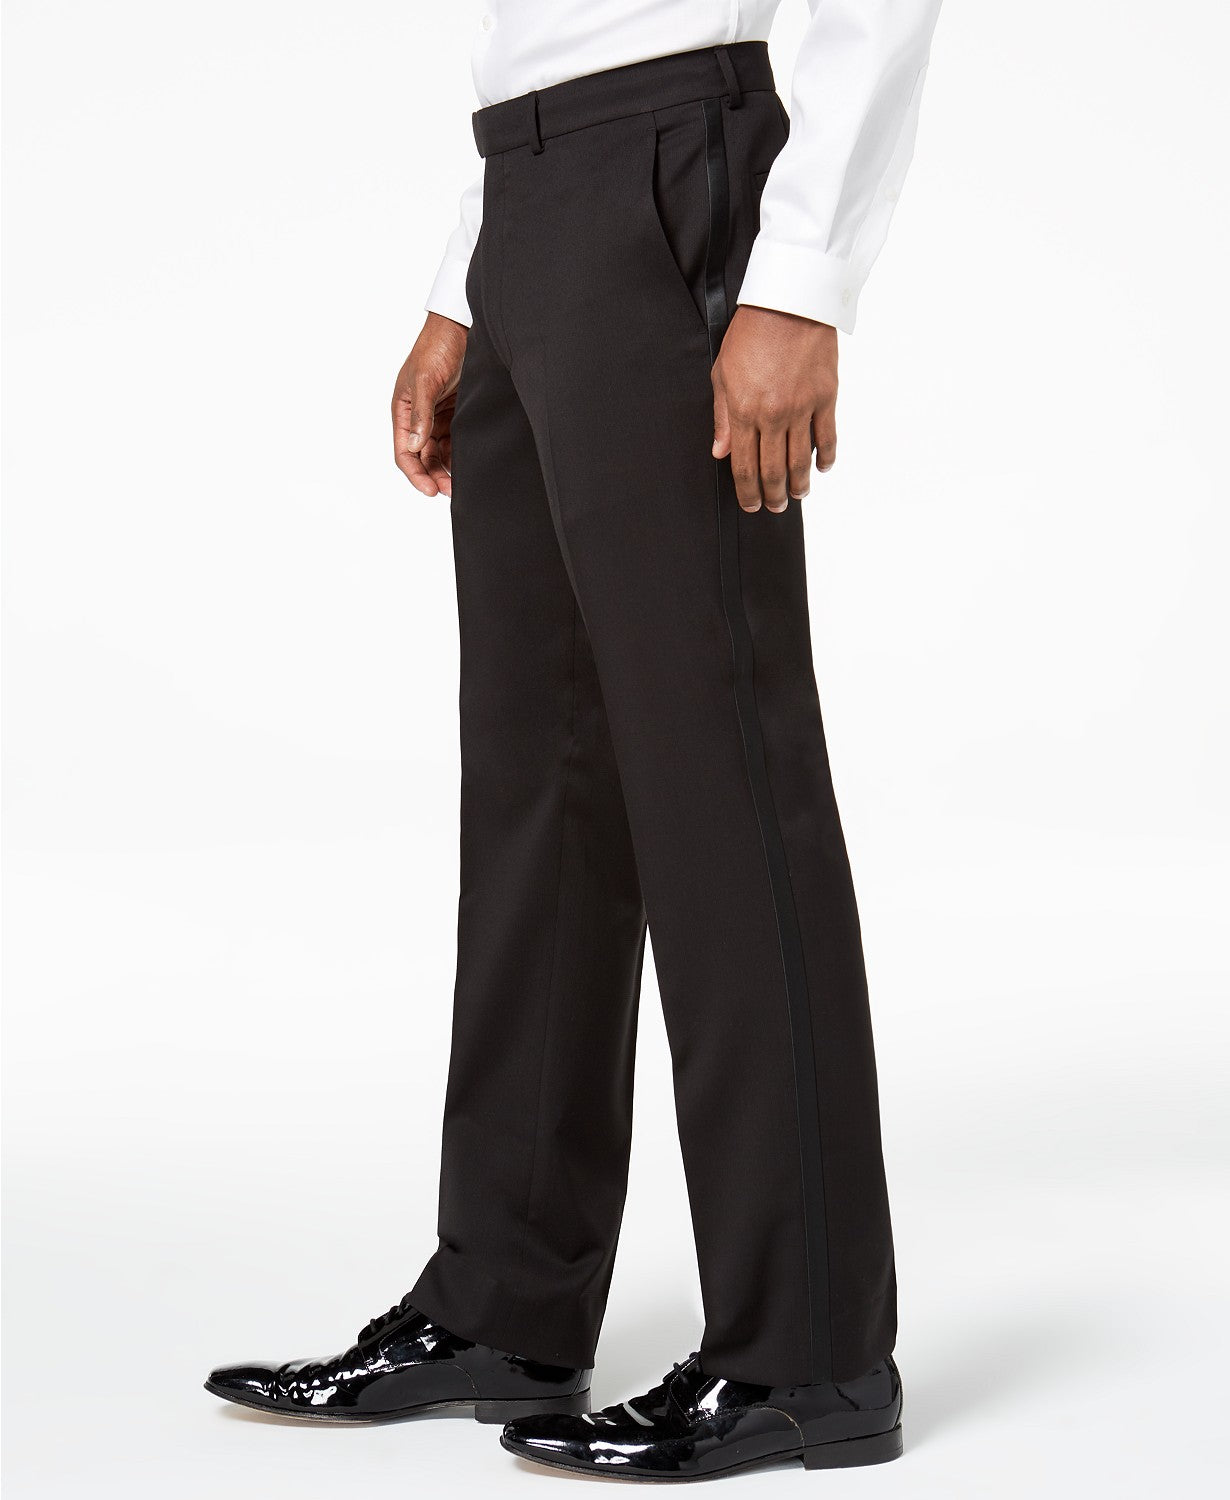 Kenneth Cole Mens Tuxedo Suit 46R - 40 x 32 Ready Flex Slim Black Notch Lapel